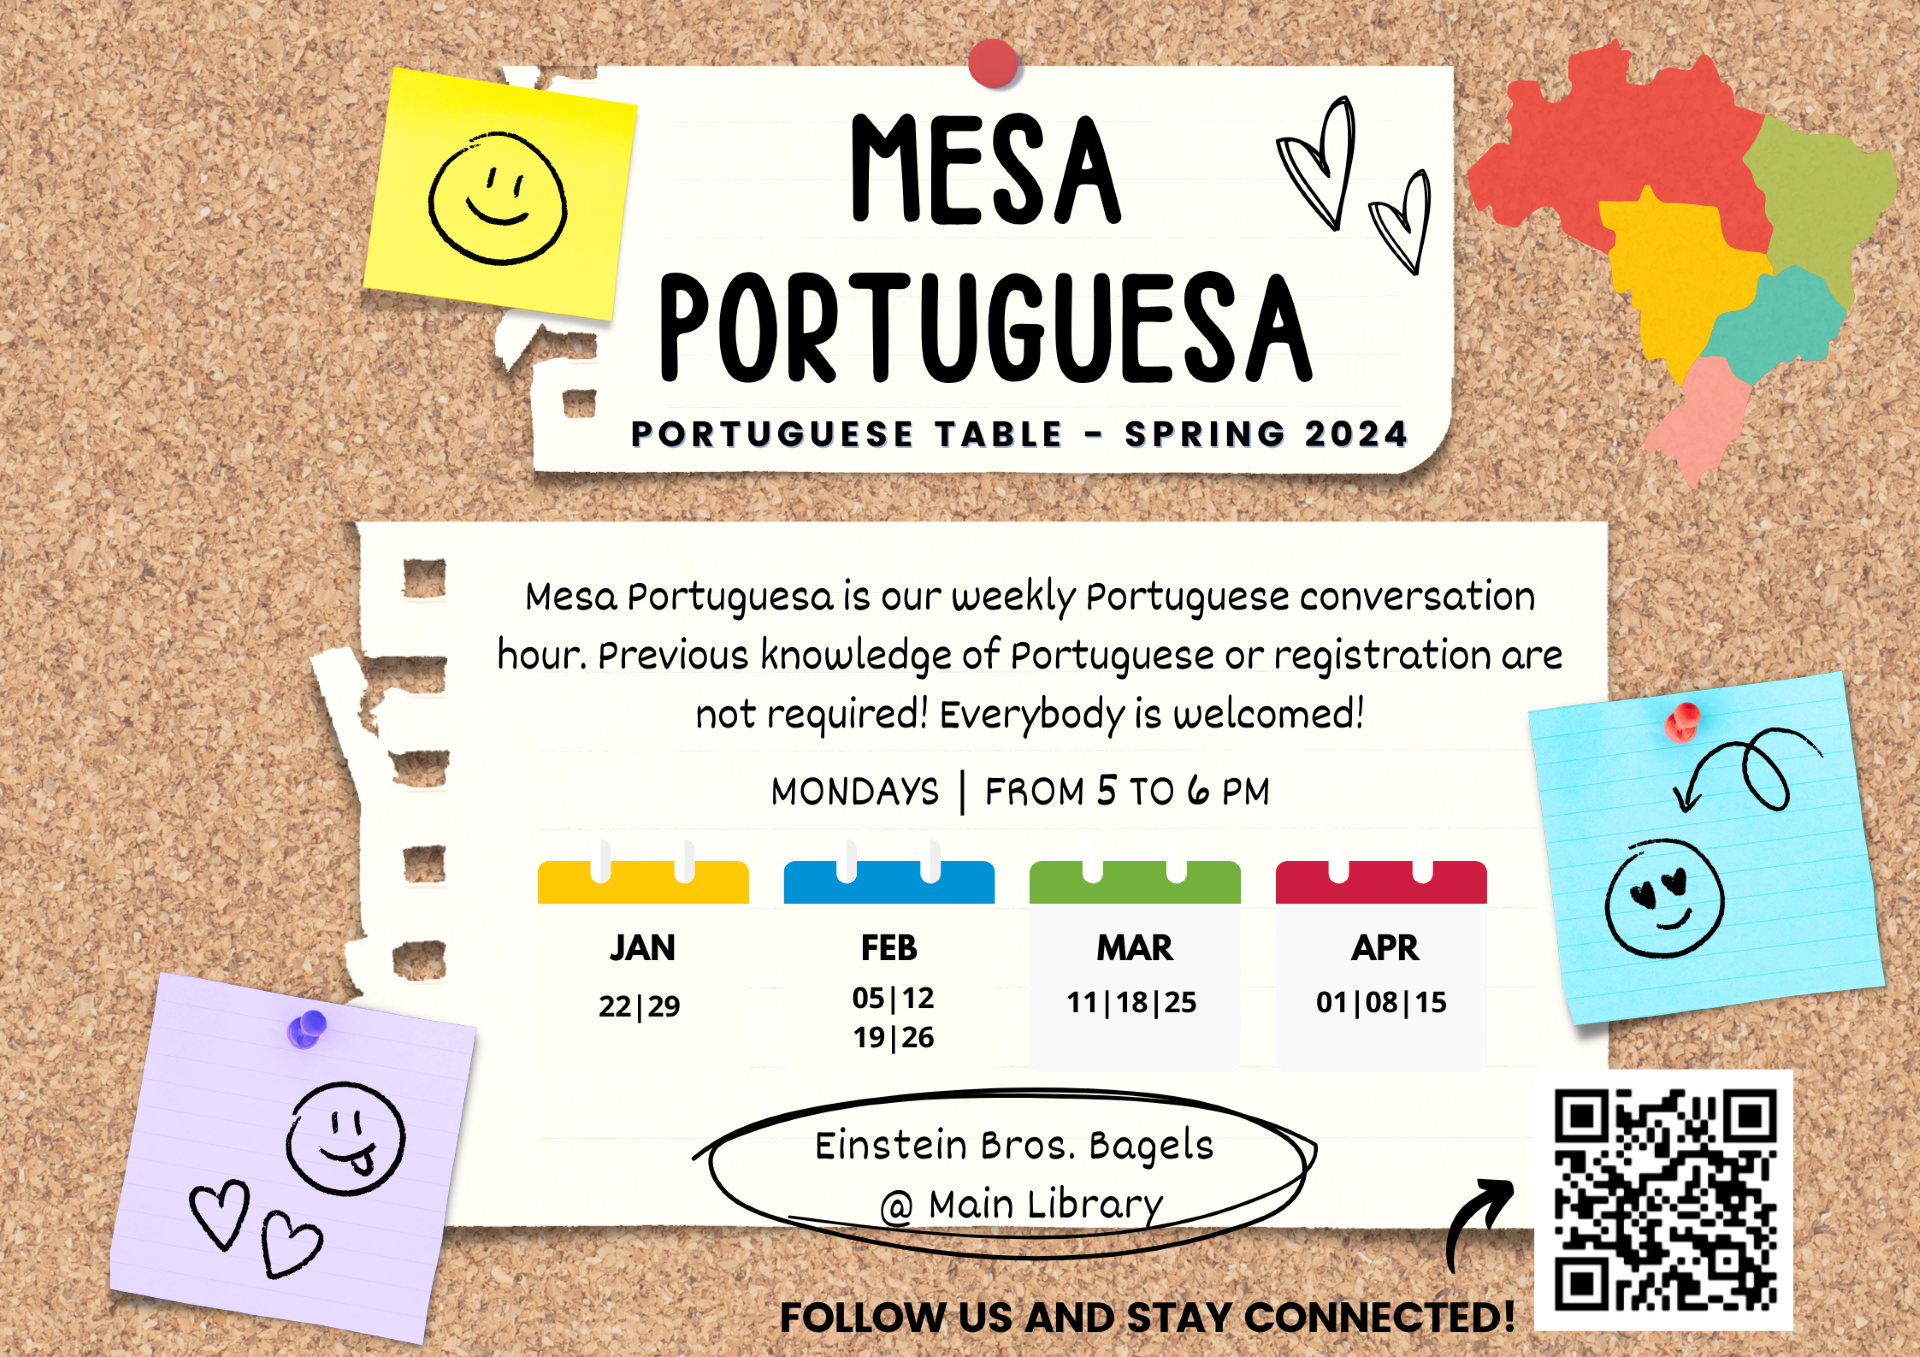 Poster advertising Mesa Portuguesa